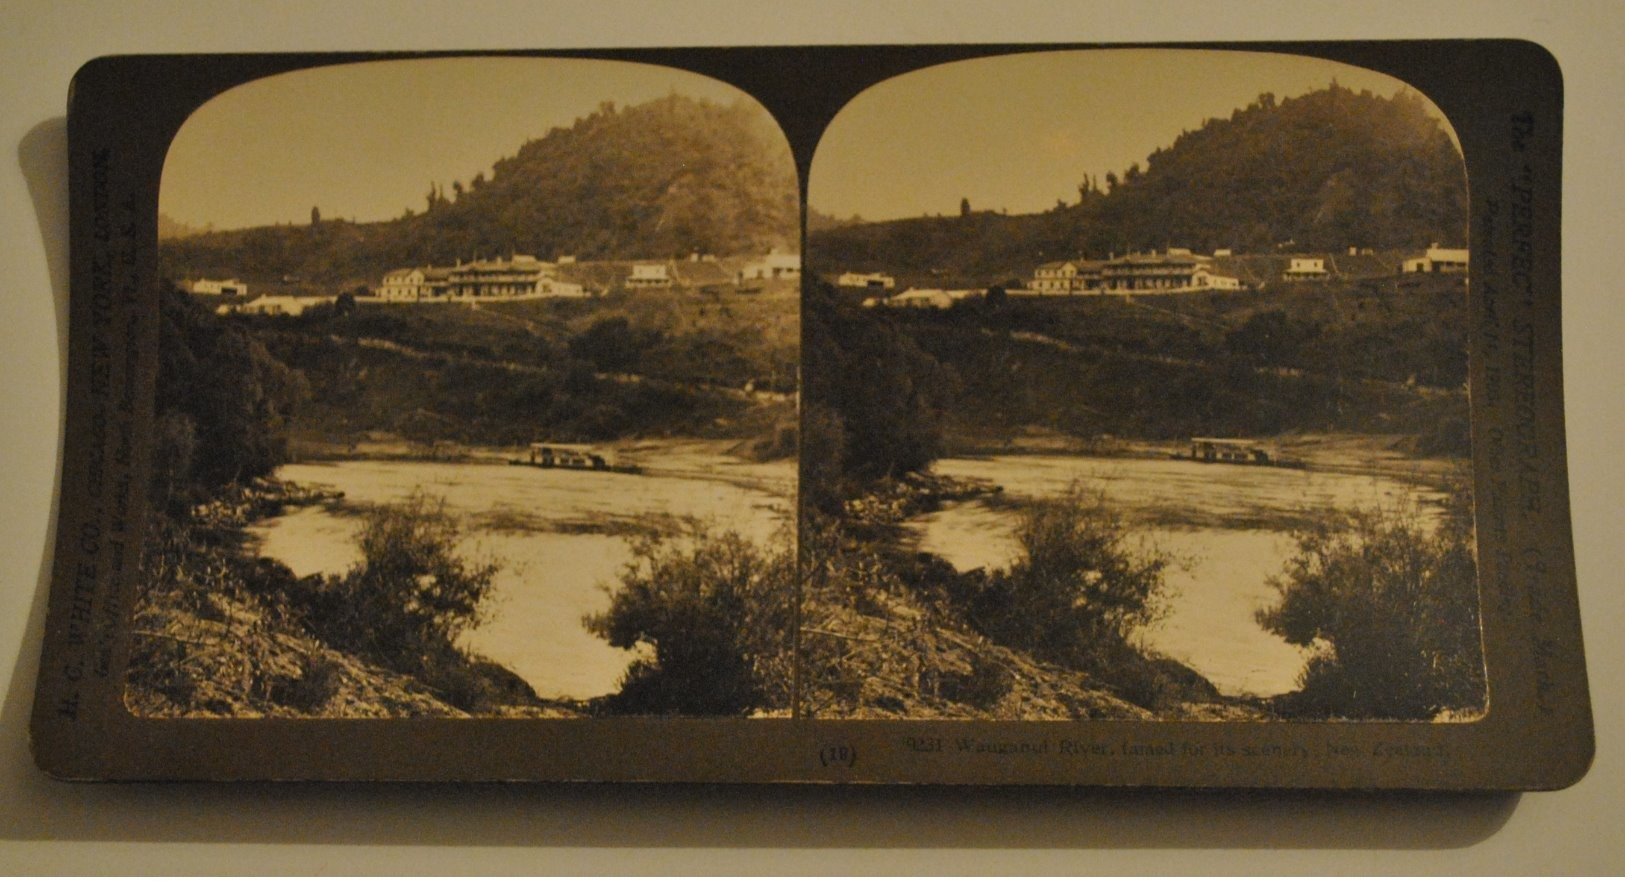 Photo Stereoscopique Photographie Nouvelle Zelande Wauganui River Famed For Its Scenery - Photos Stéréoscopiques